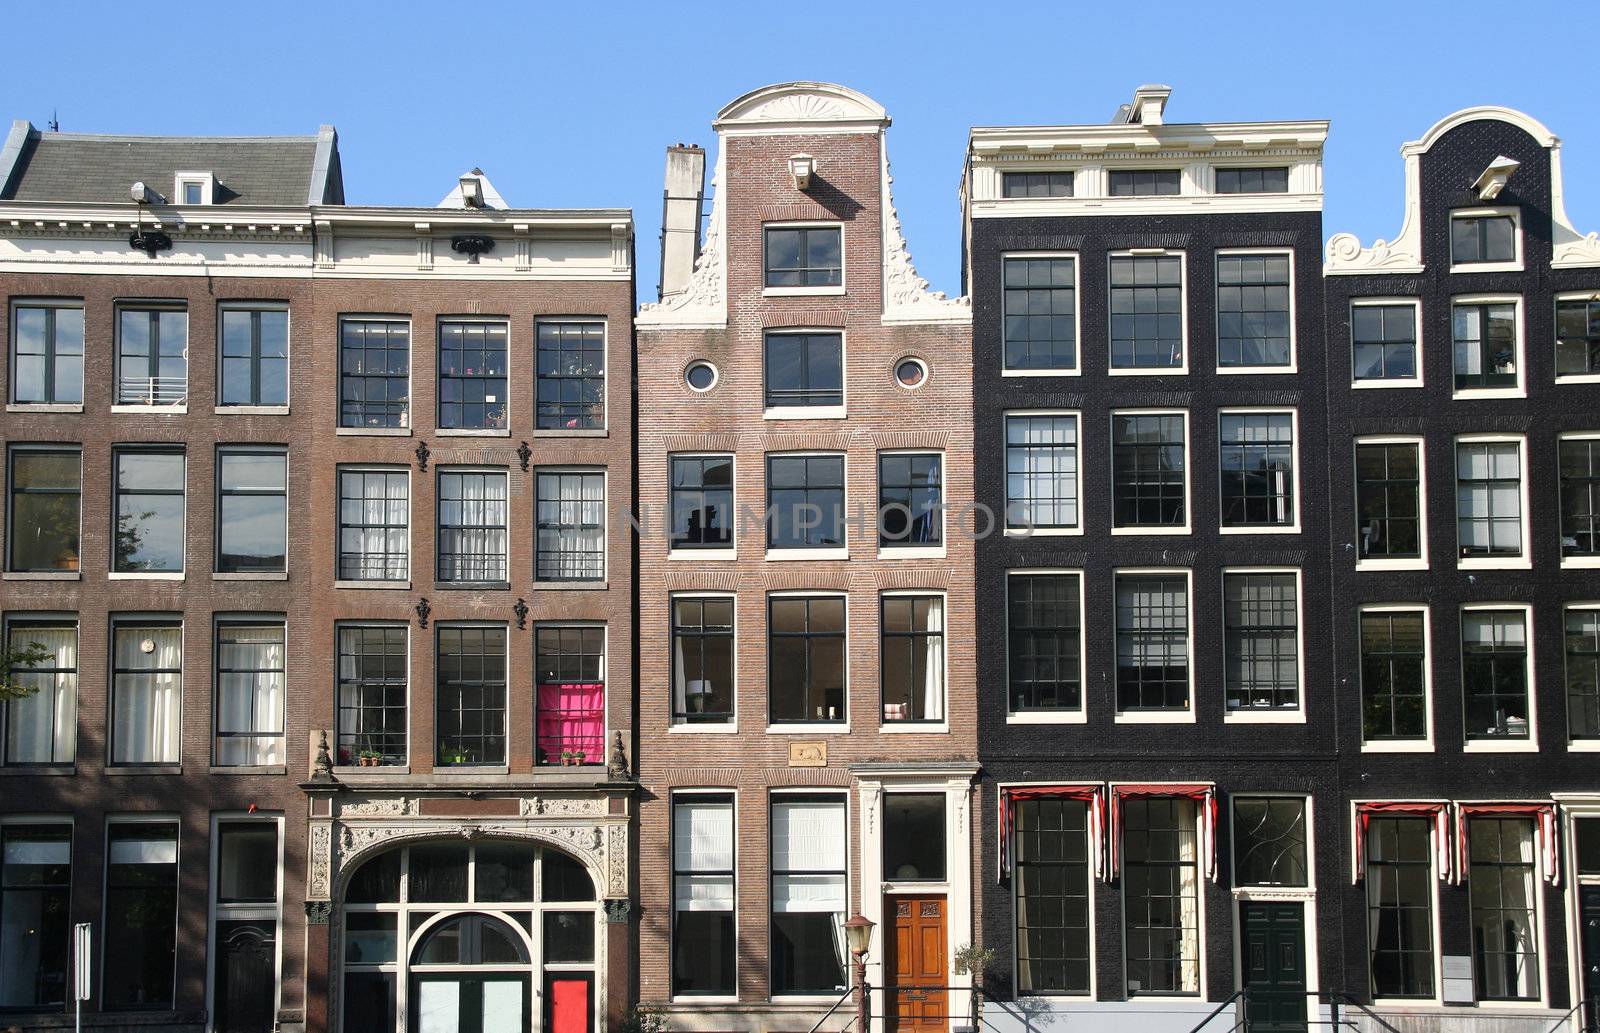 Amsterdam Canal Houses by JanKranendonk